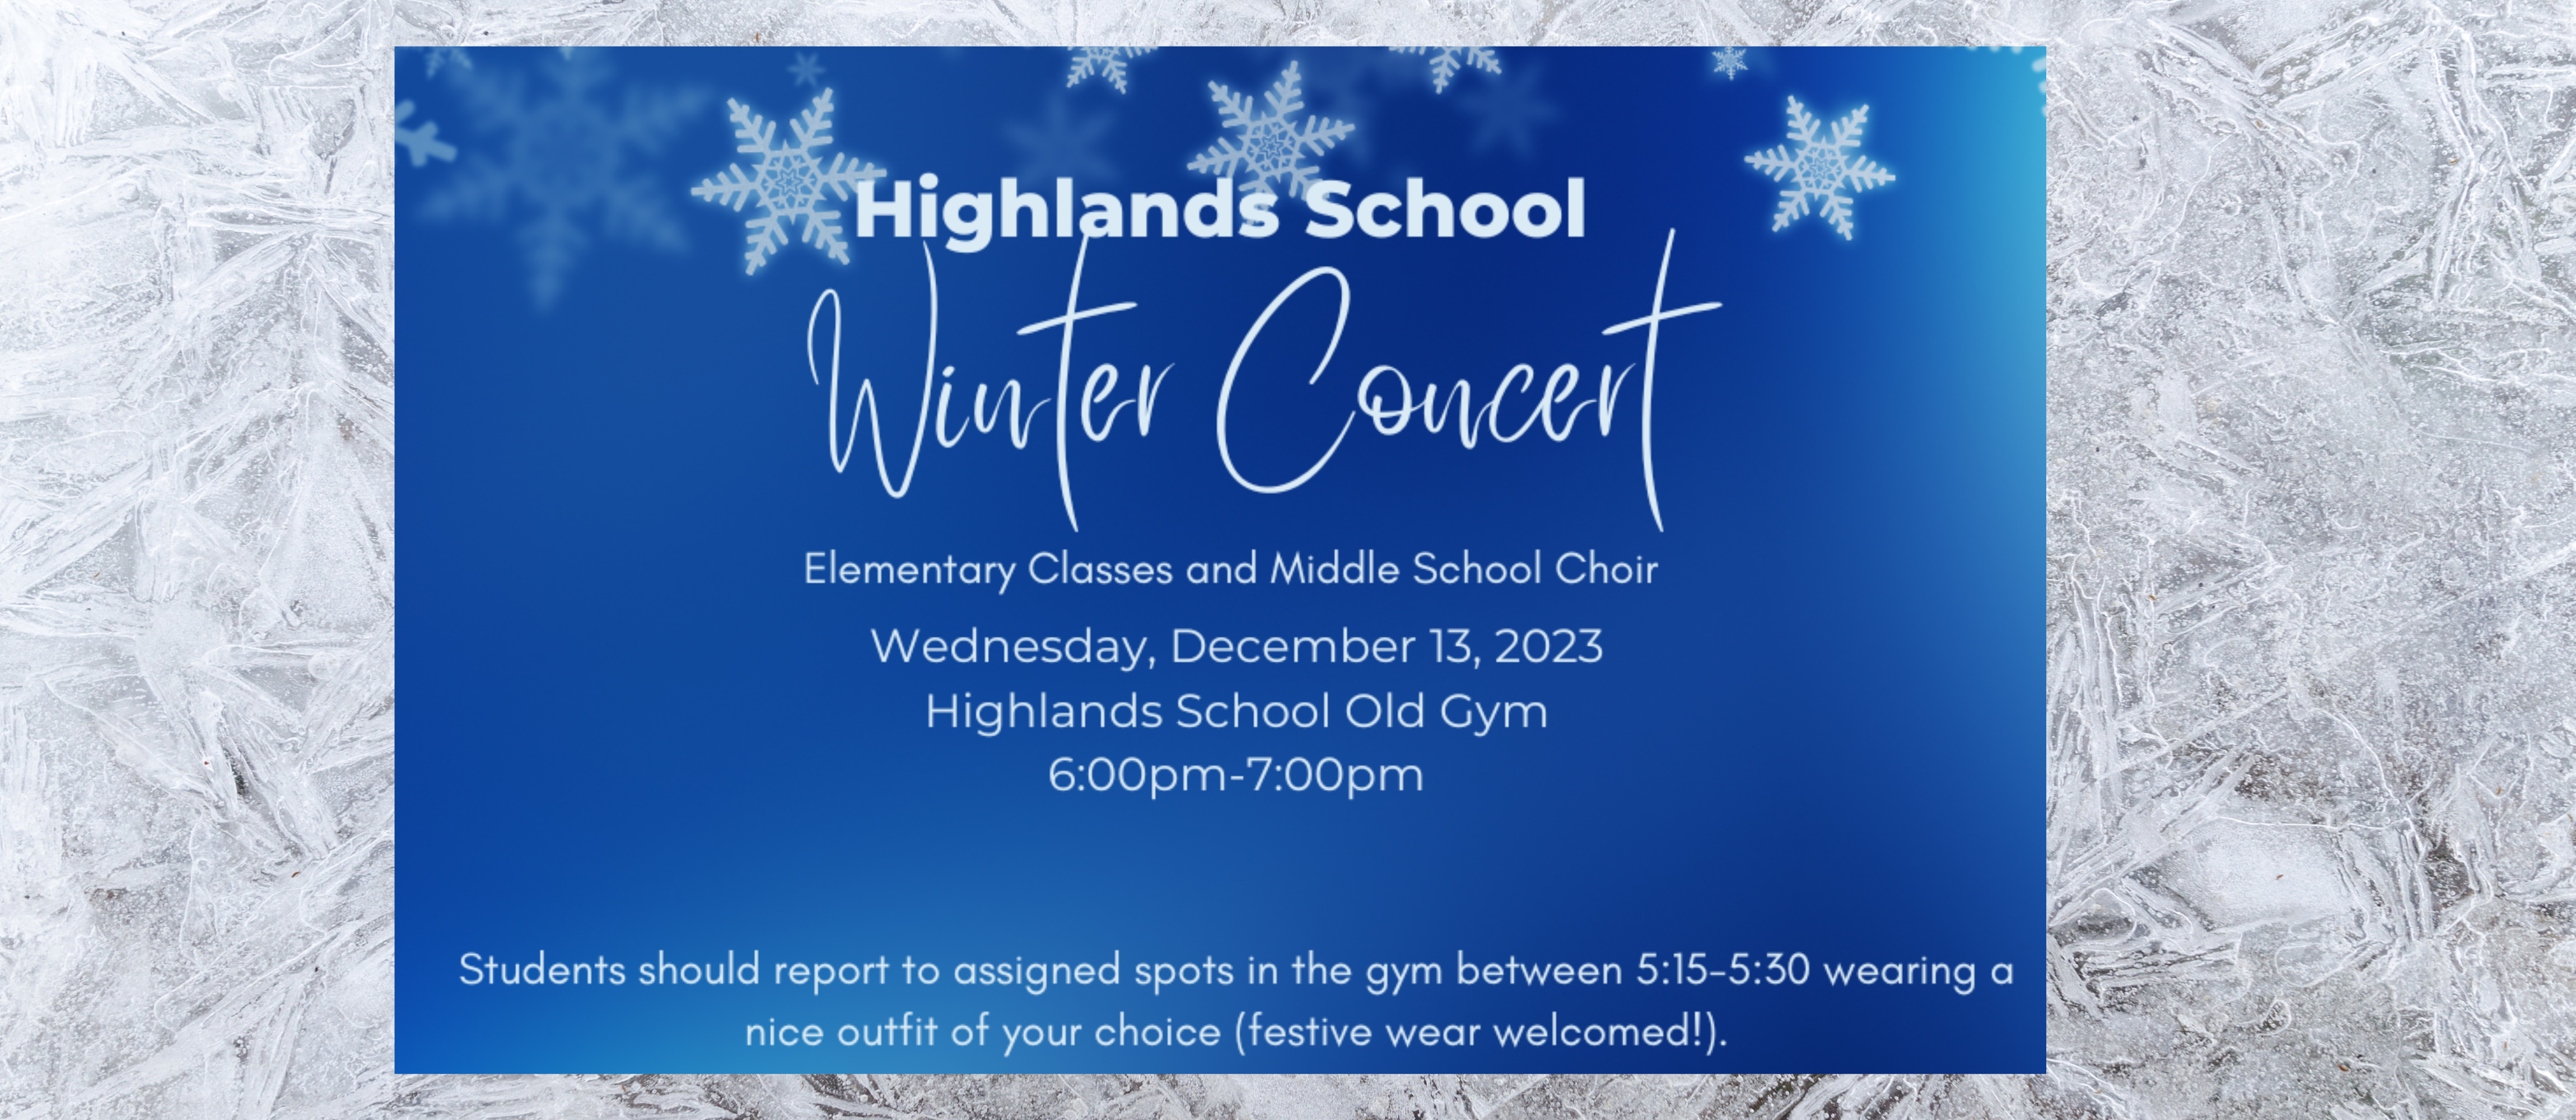 Highlands School Winter Concert - December 13th at 6 pm in Old Gym